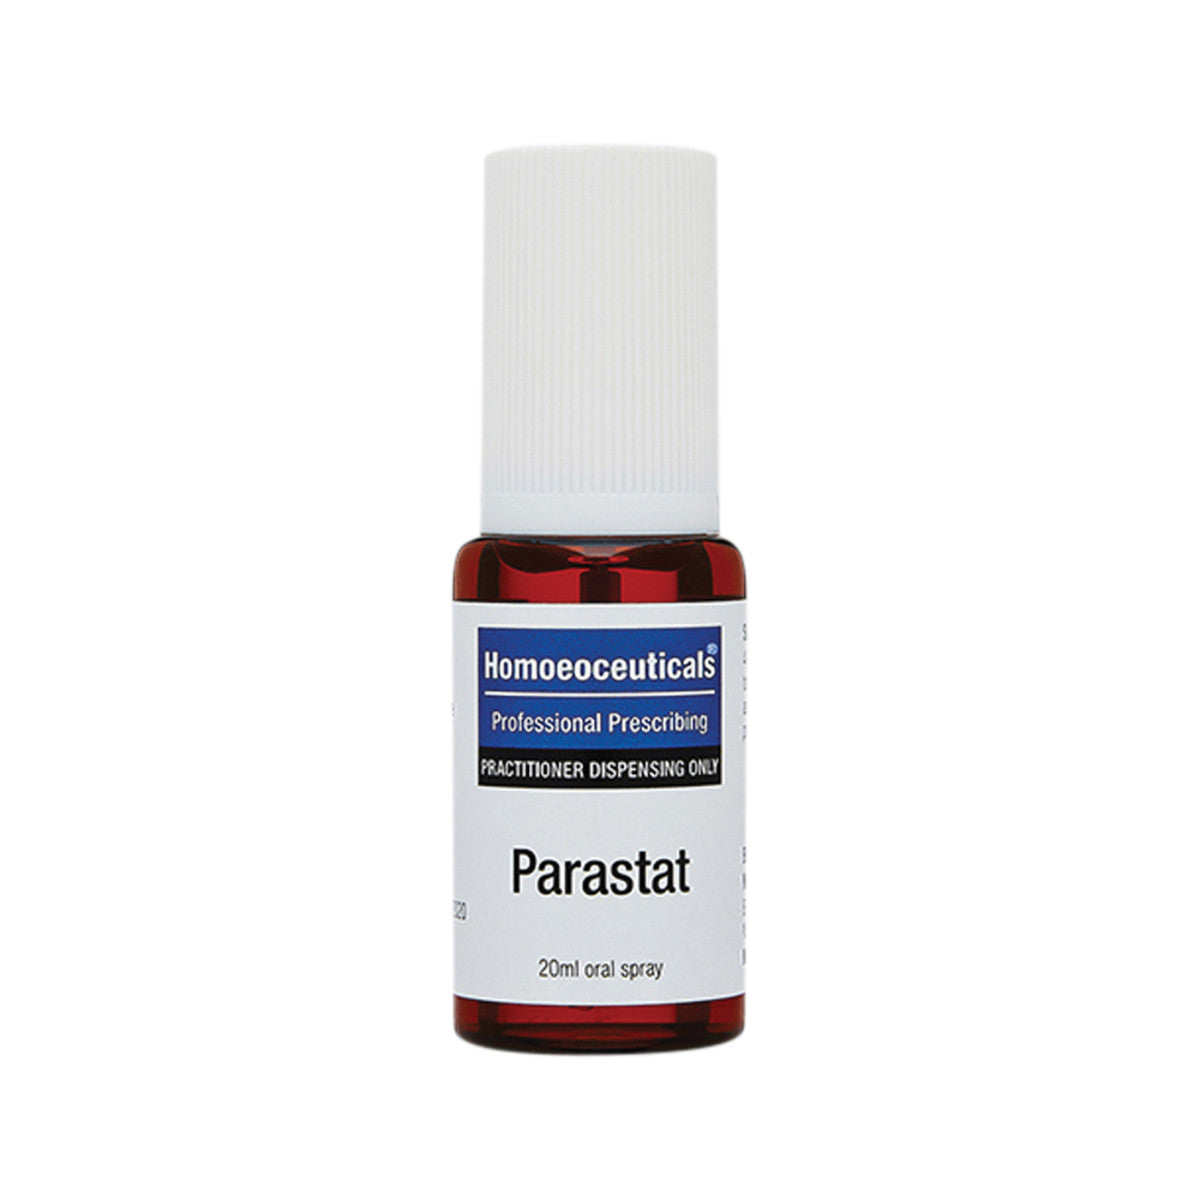 Homoeoceuticals - Parastat Spray